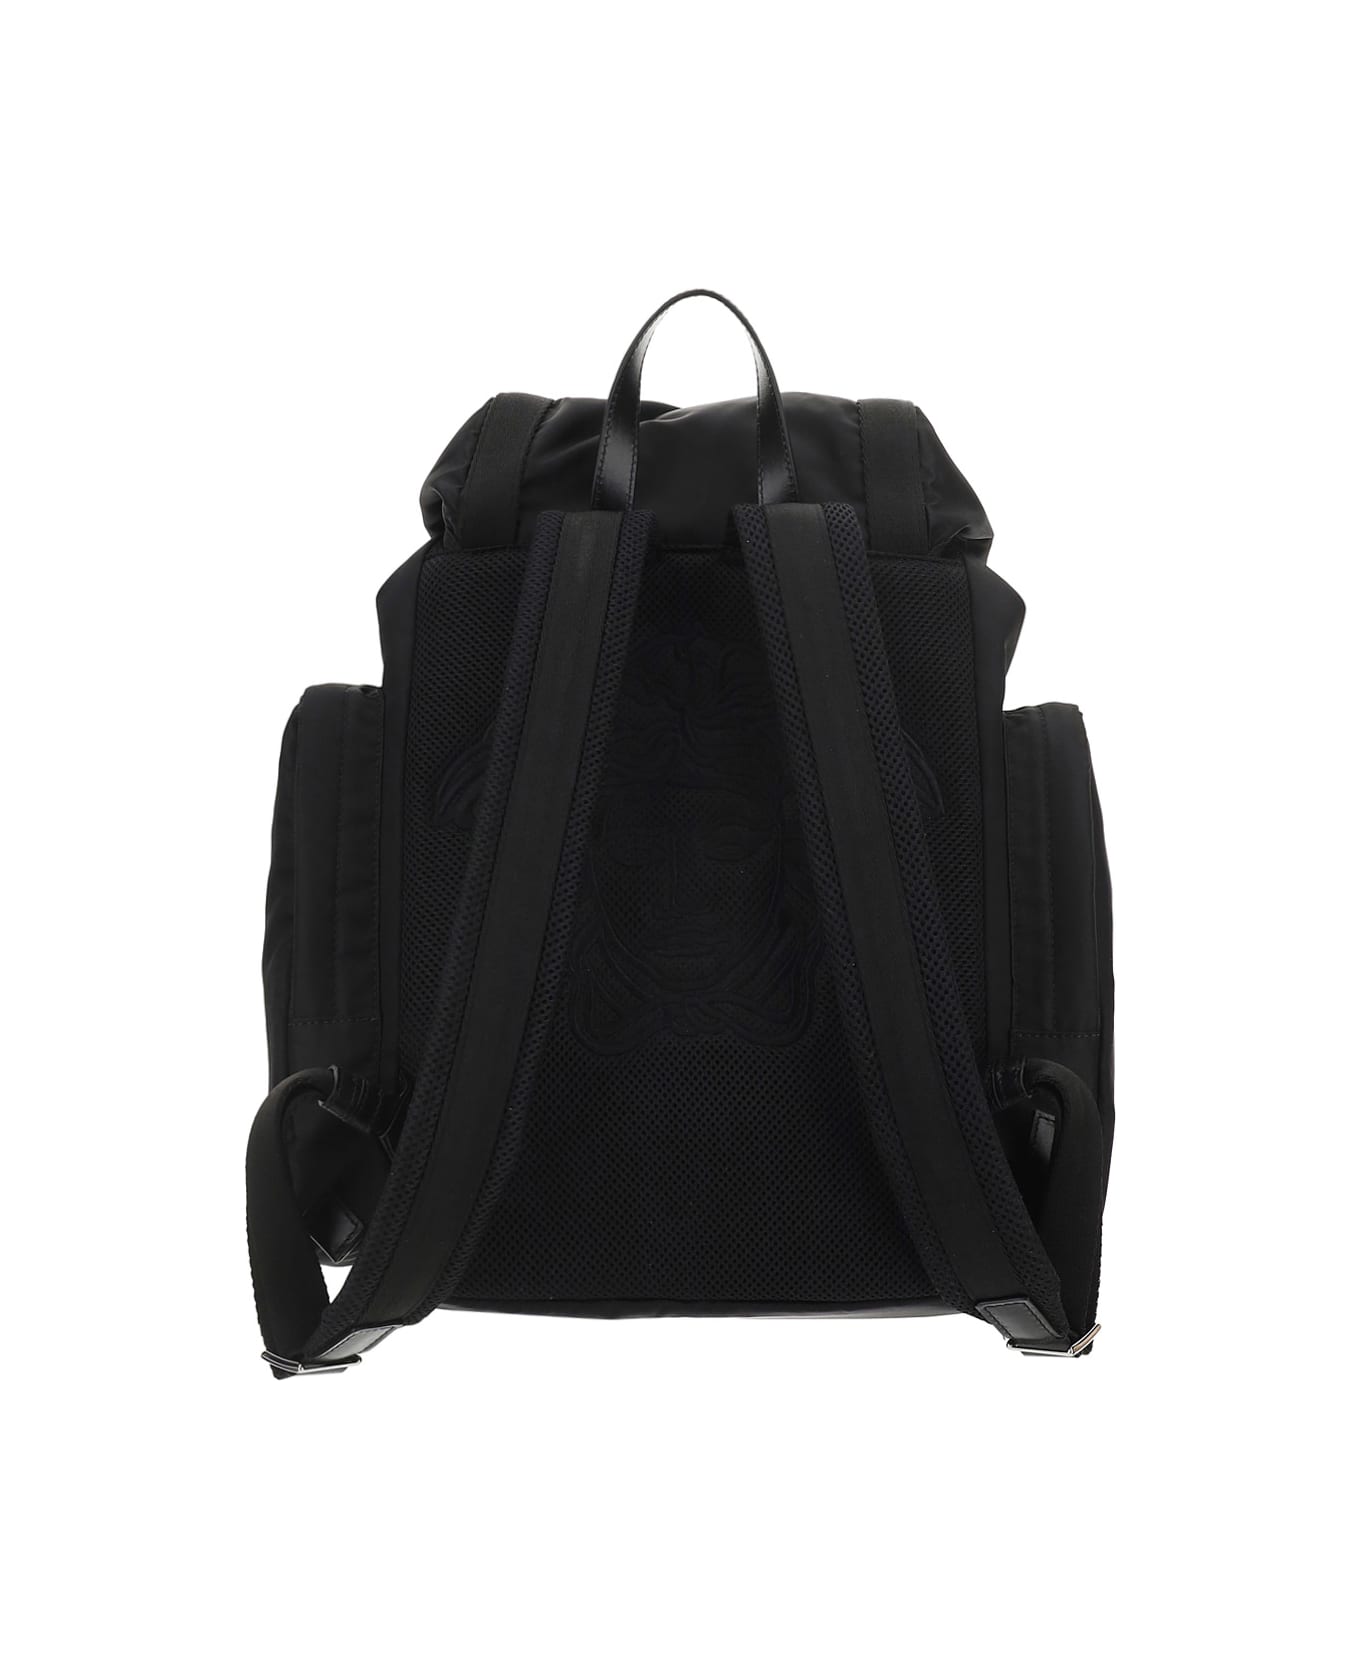 Versace Backpack - Nero/palladio